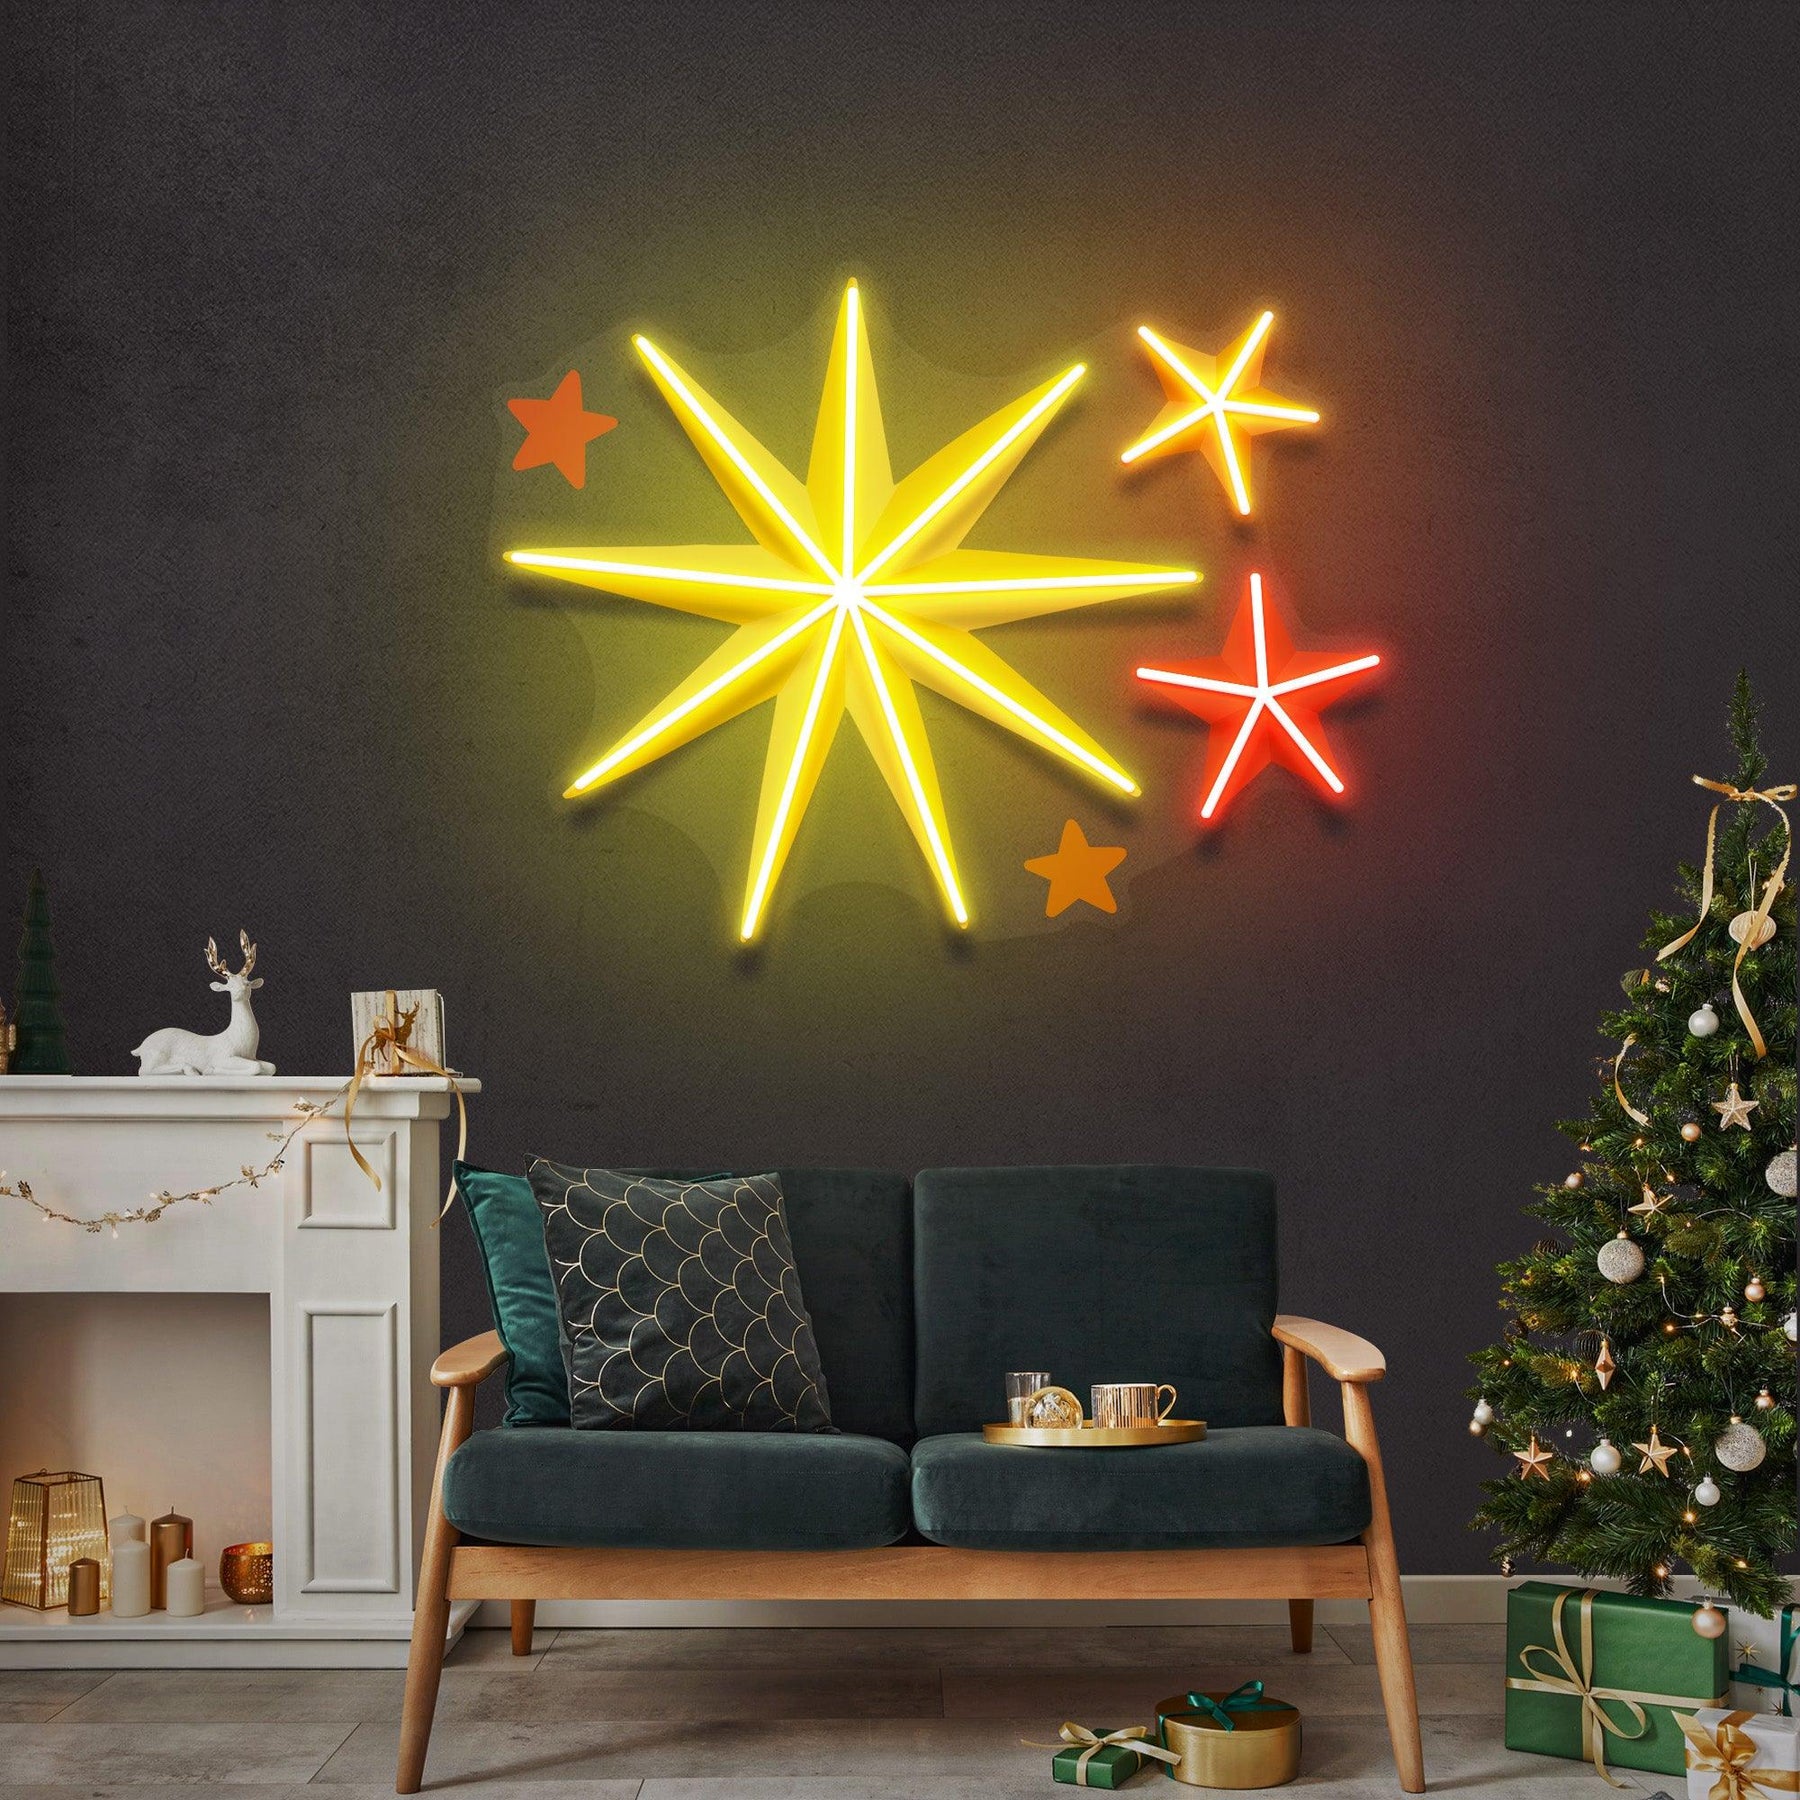 Four Christmas Symbols LED Neon Sign Artwork